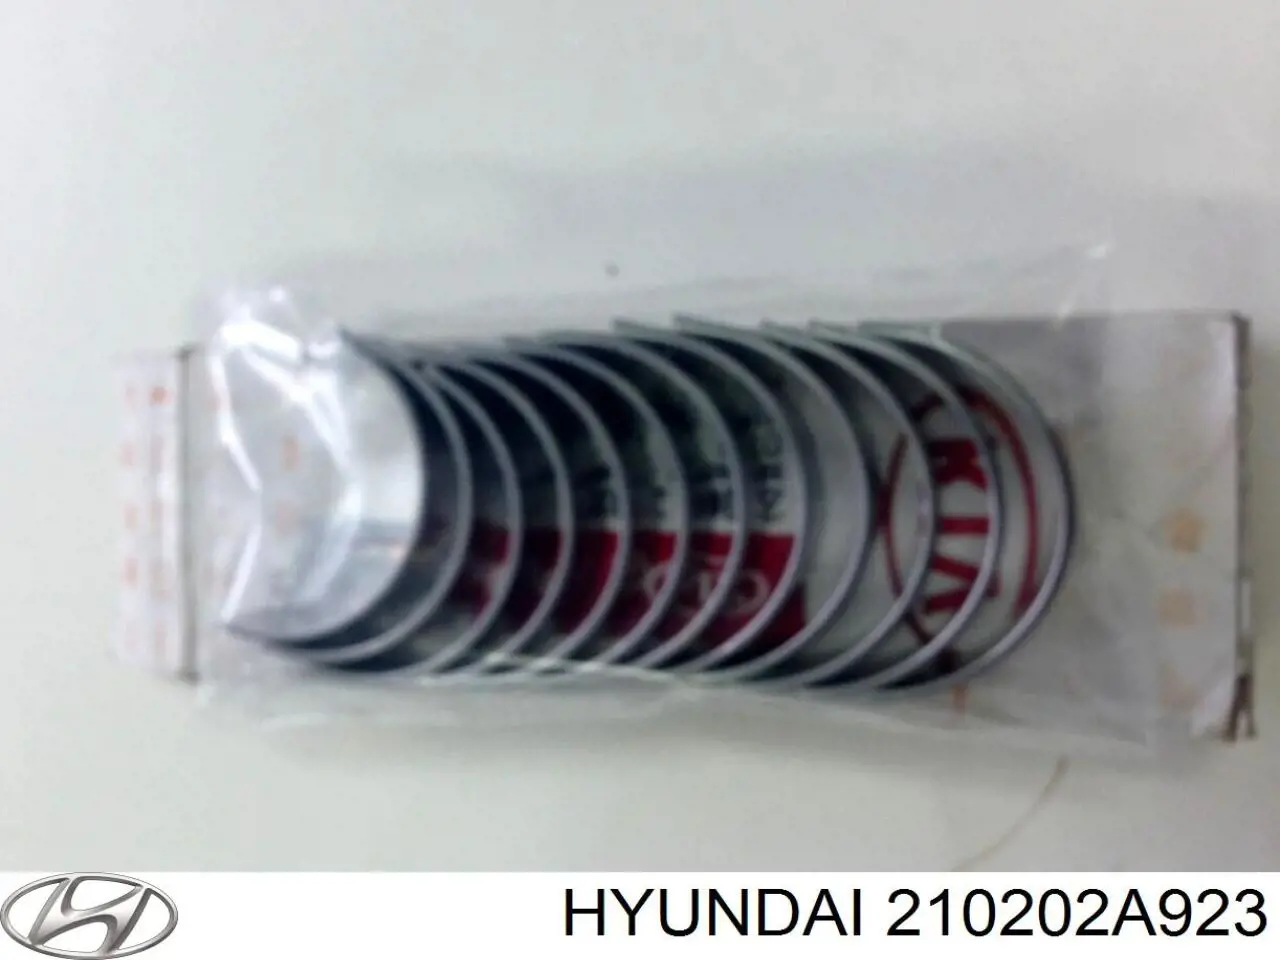 210202A923 Hyundai/Kia вкладыши коленвала коренные, комплект, стандарт (std)